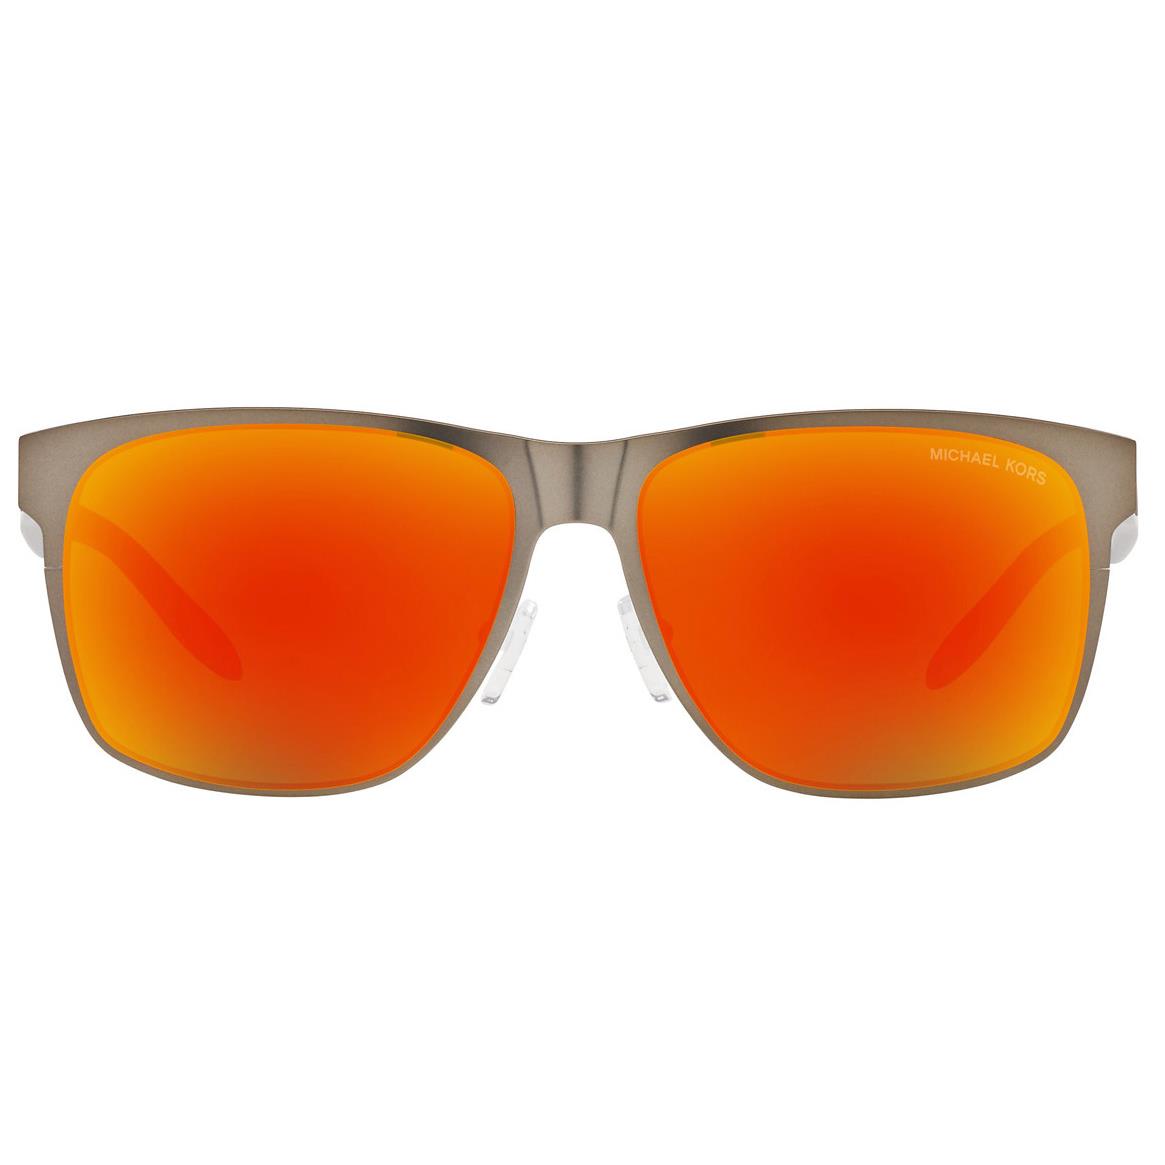 Michael Kors Sunglasses Kodiak MK1103 10036Q 58 - Matte Gunmetal Orange Mirror